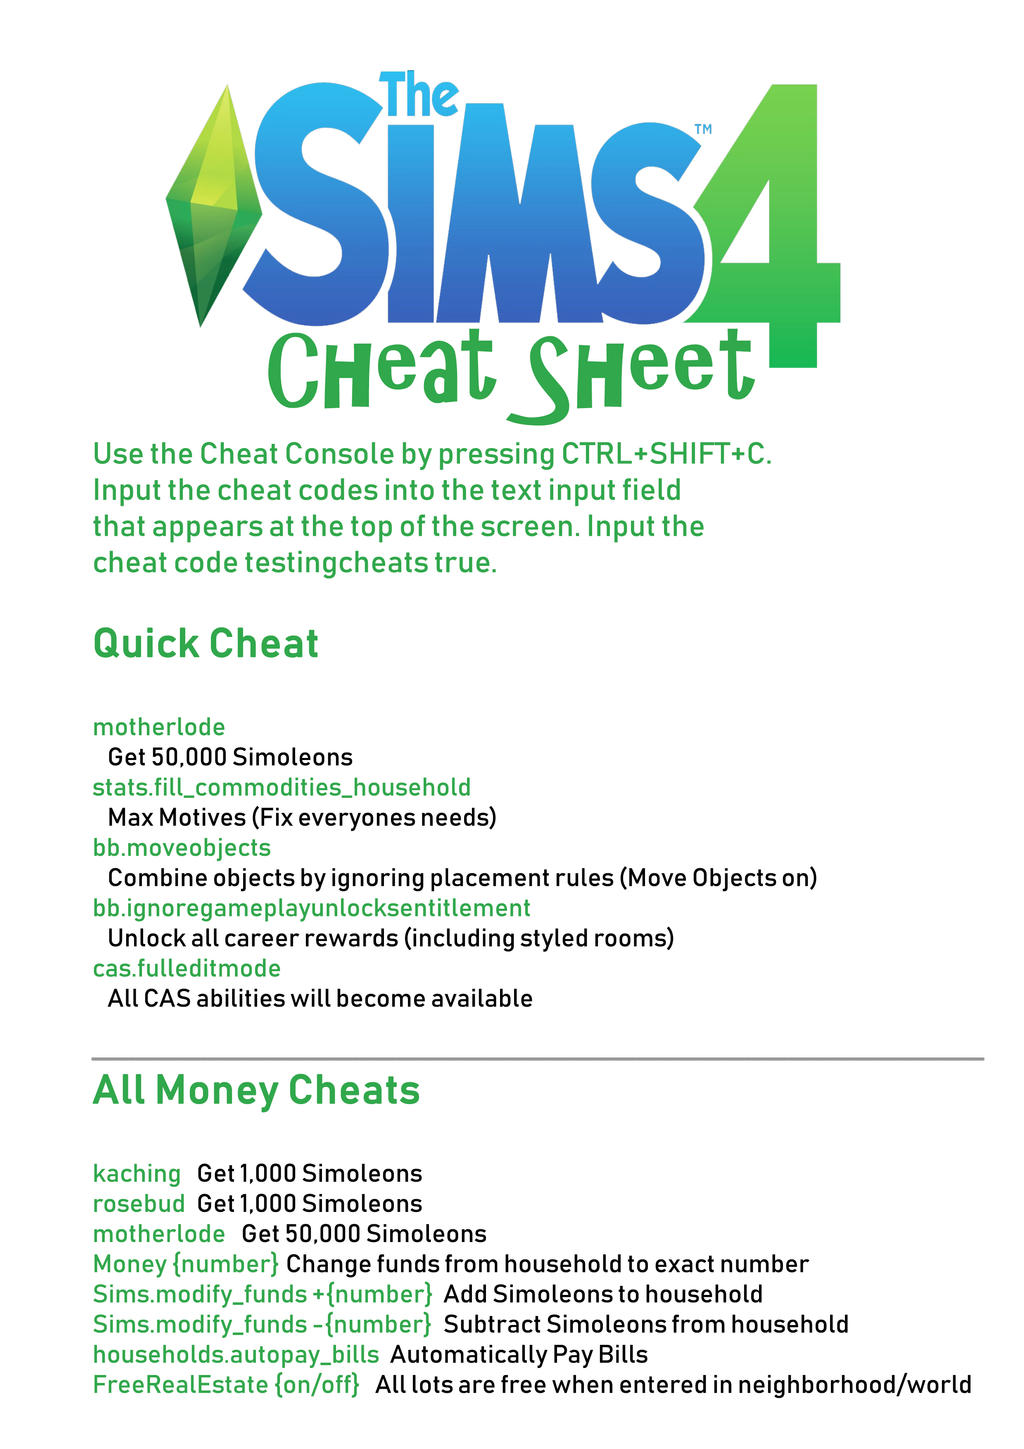 Sims 4 Cheat Sheet1 by SykesSim on DeviantArt